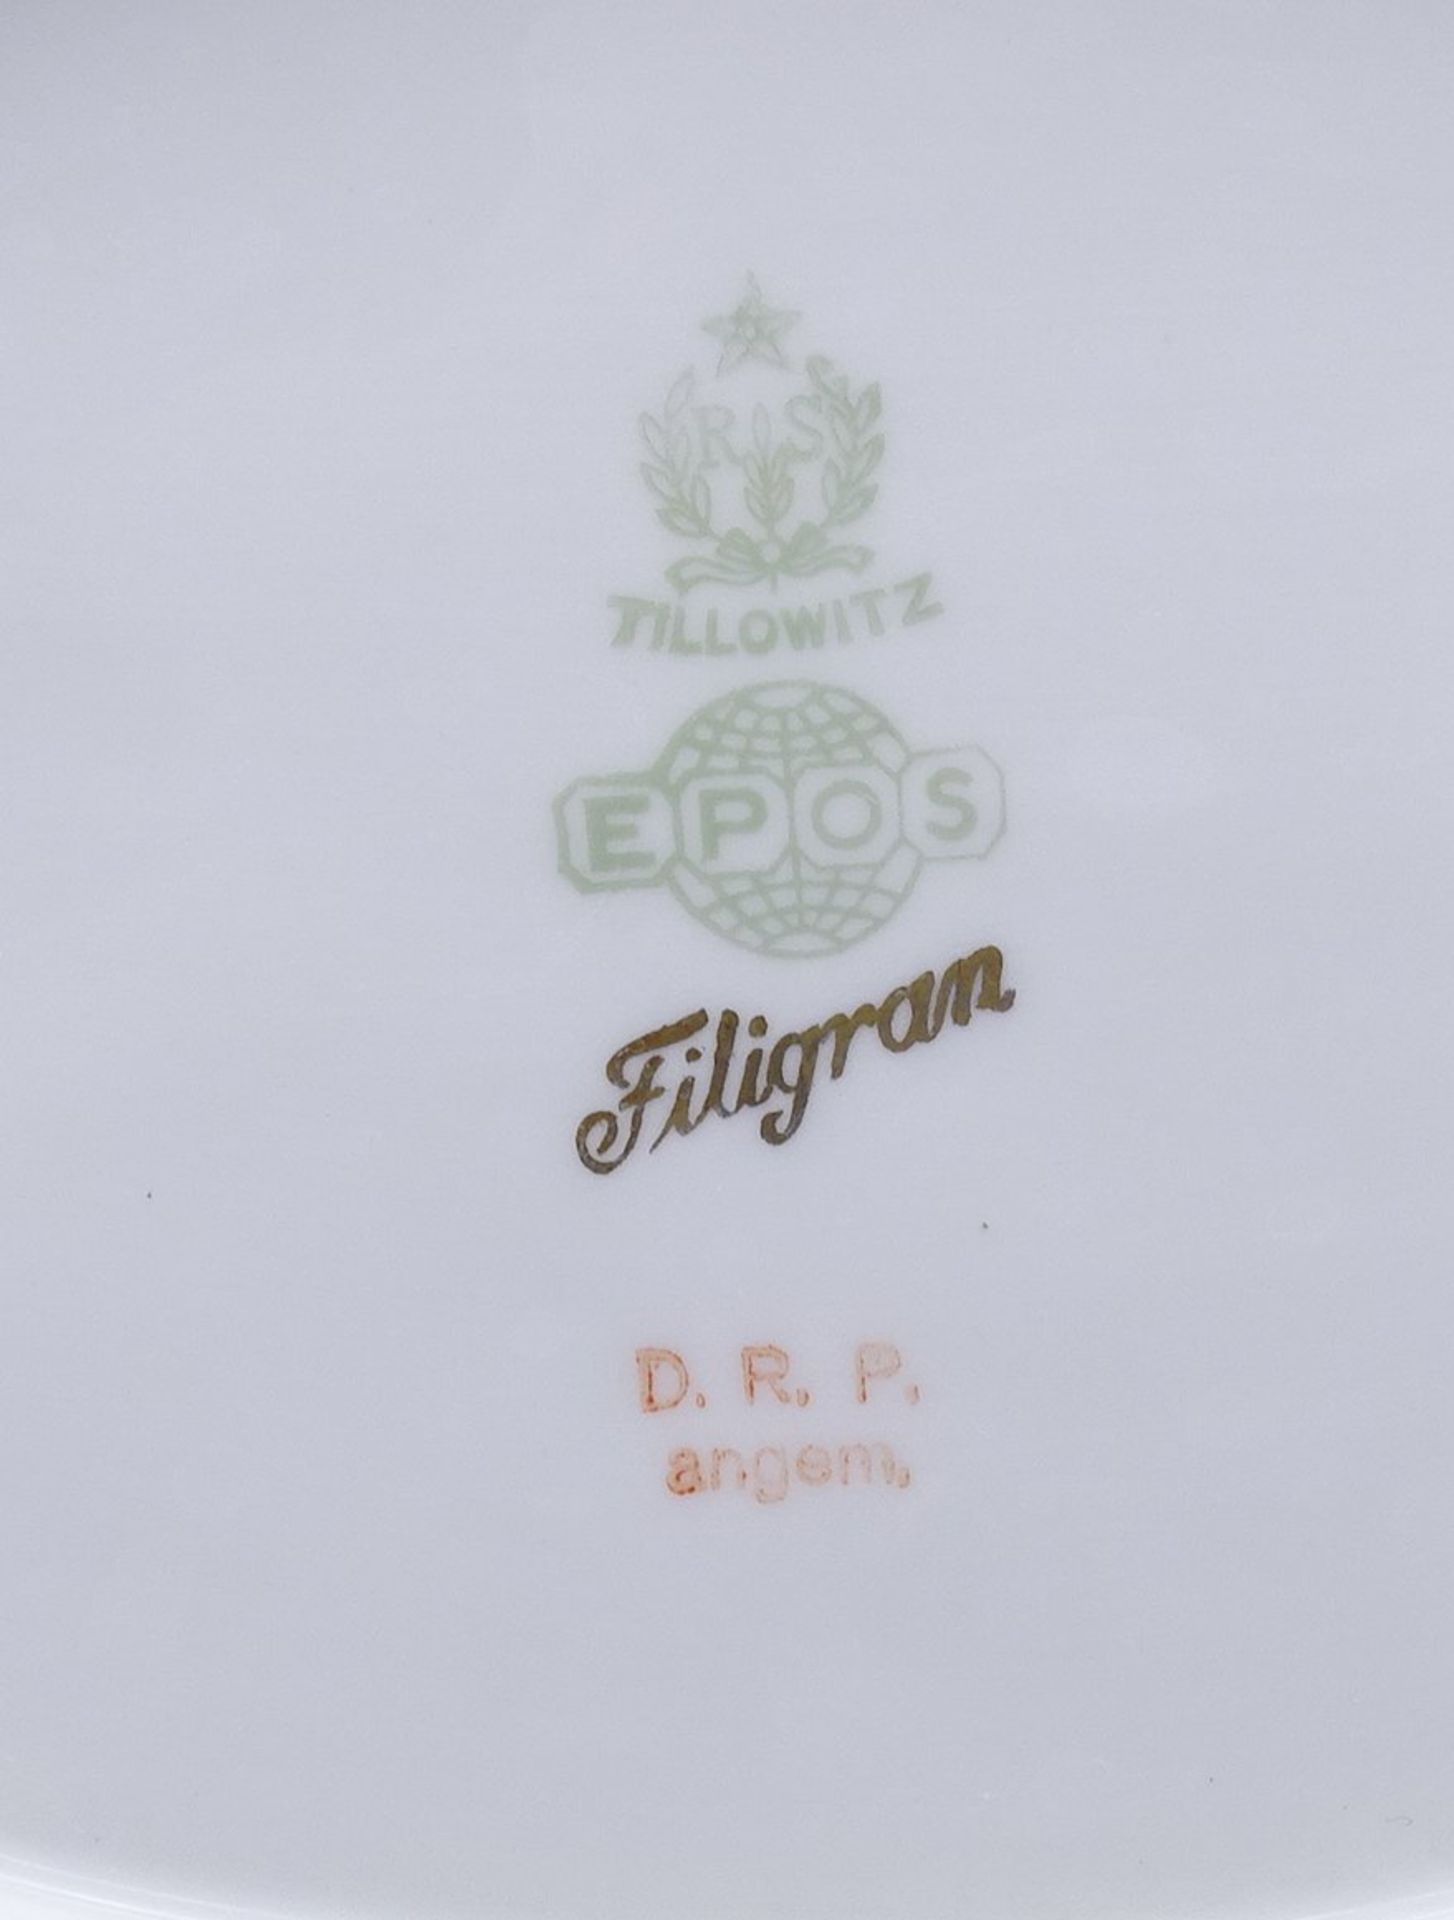 Prunkschale aus der Porzellanmanufaktur Tillowitz  Epos Modell Filigran , vergoldet , tlw. abgerieb - Bild 6 aus 6